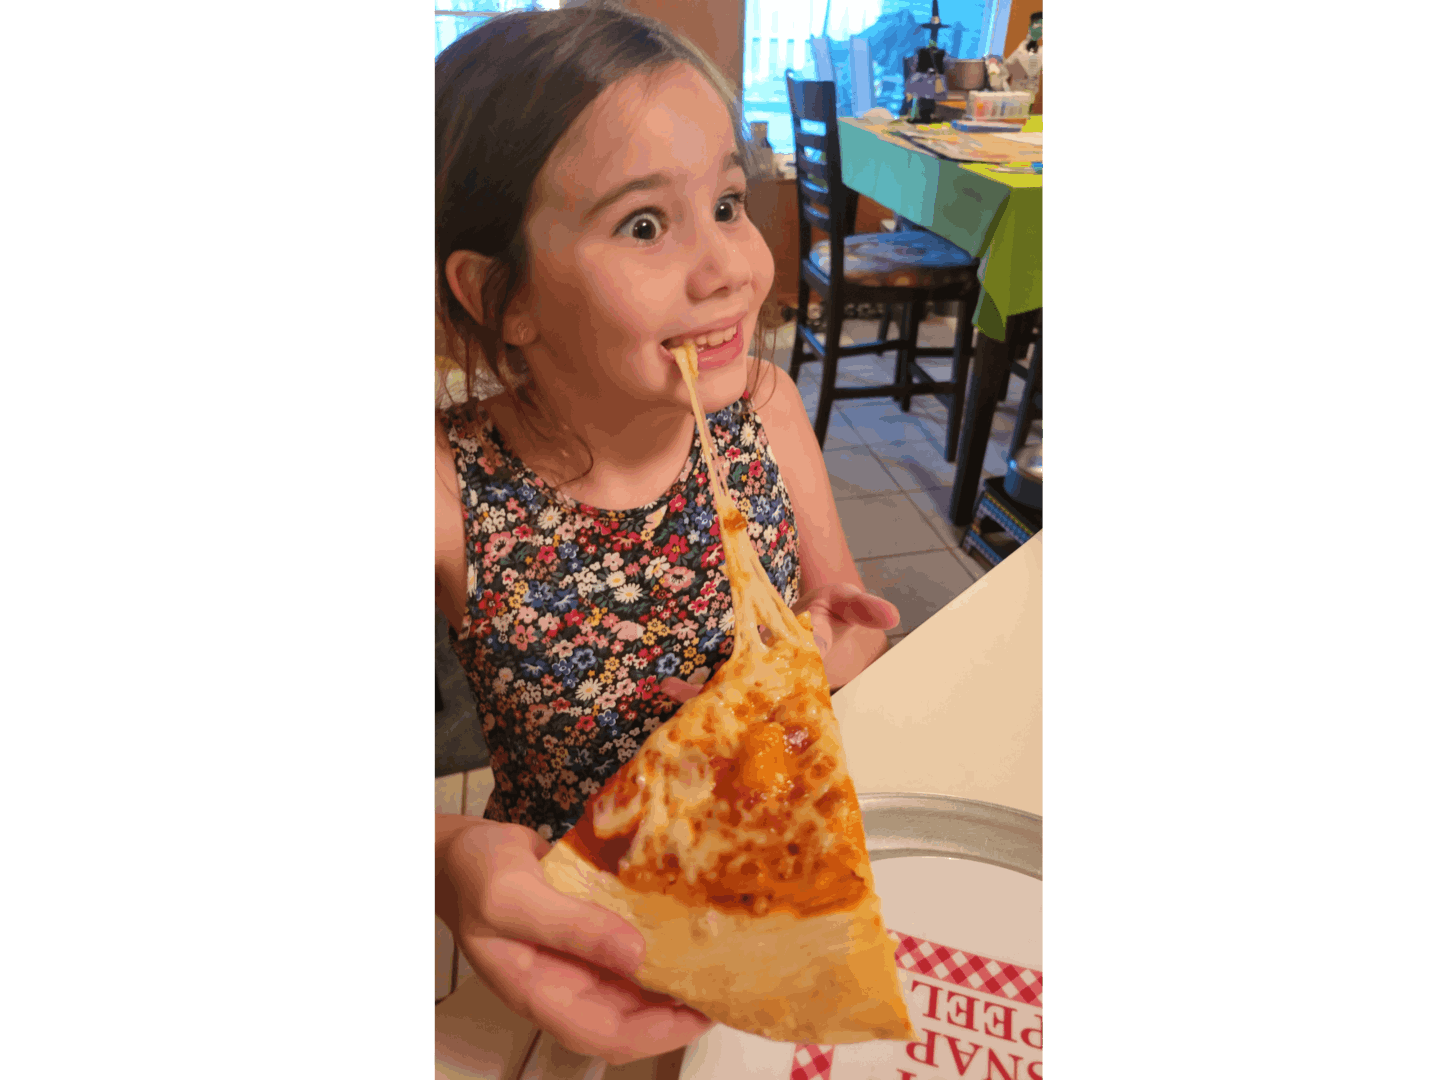 A girl eating a pizza inside a restaurant